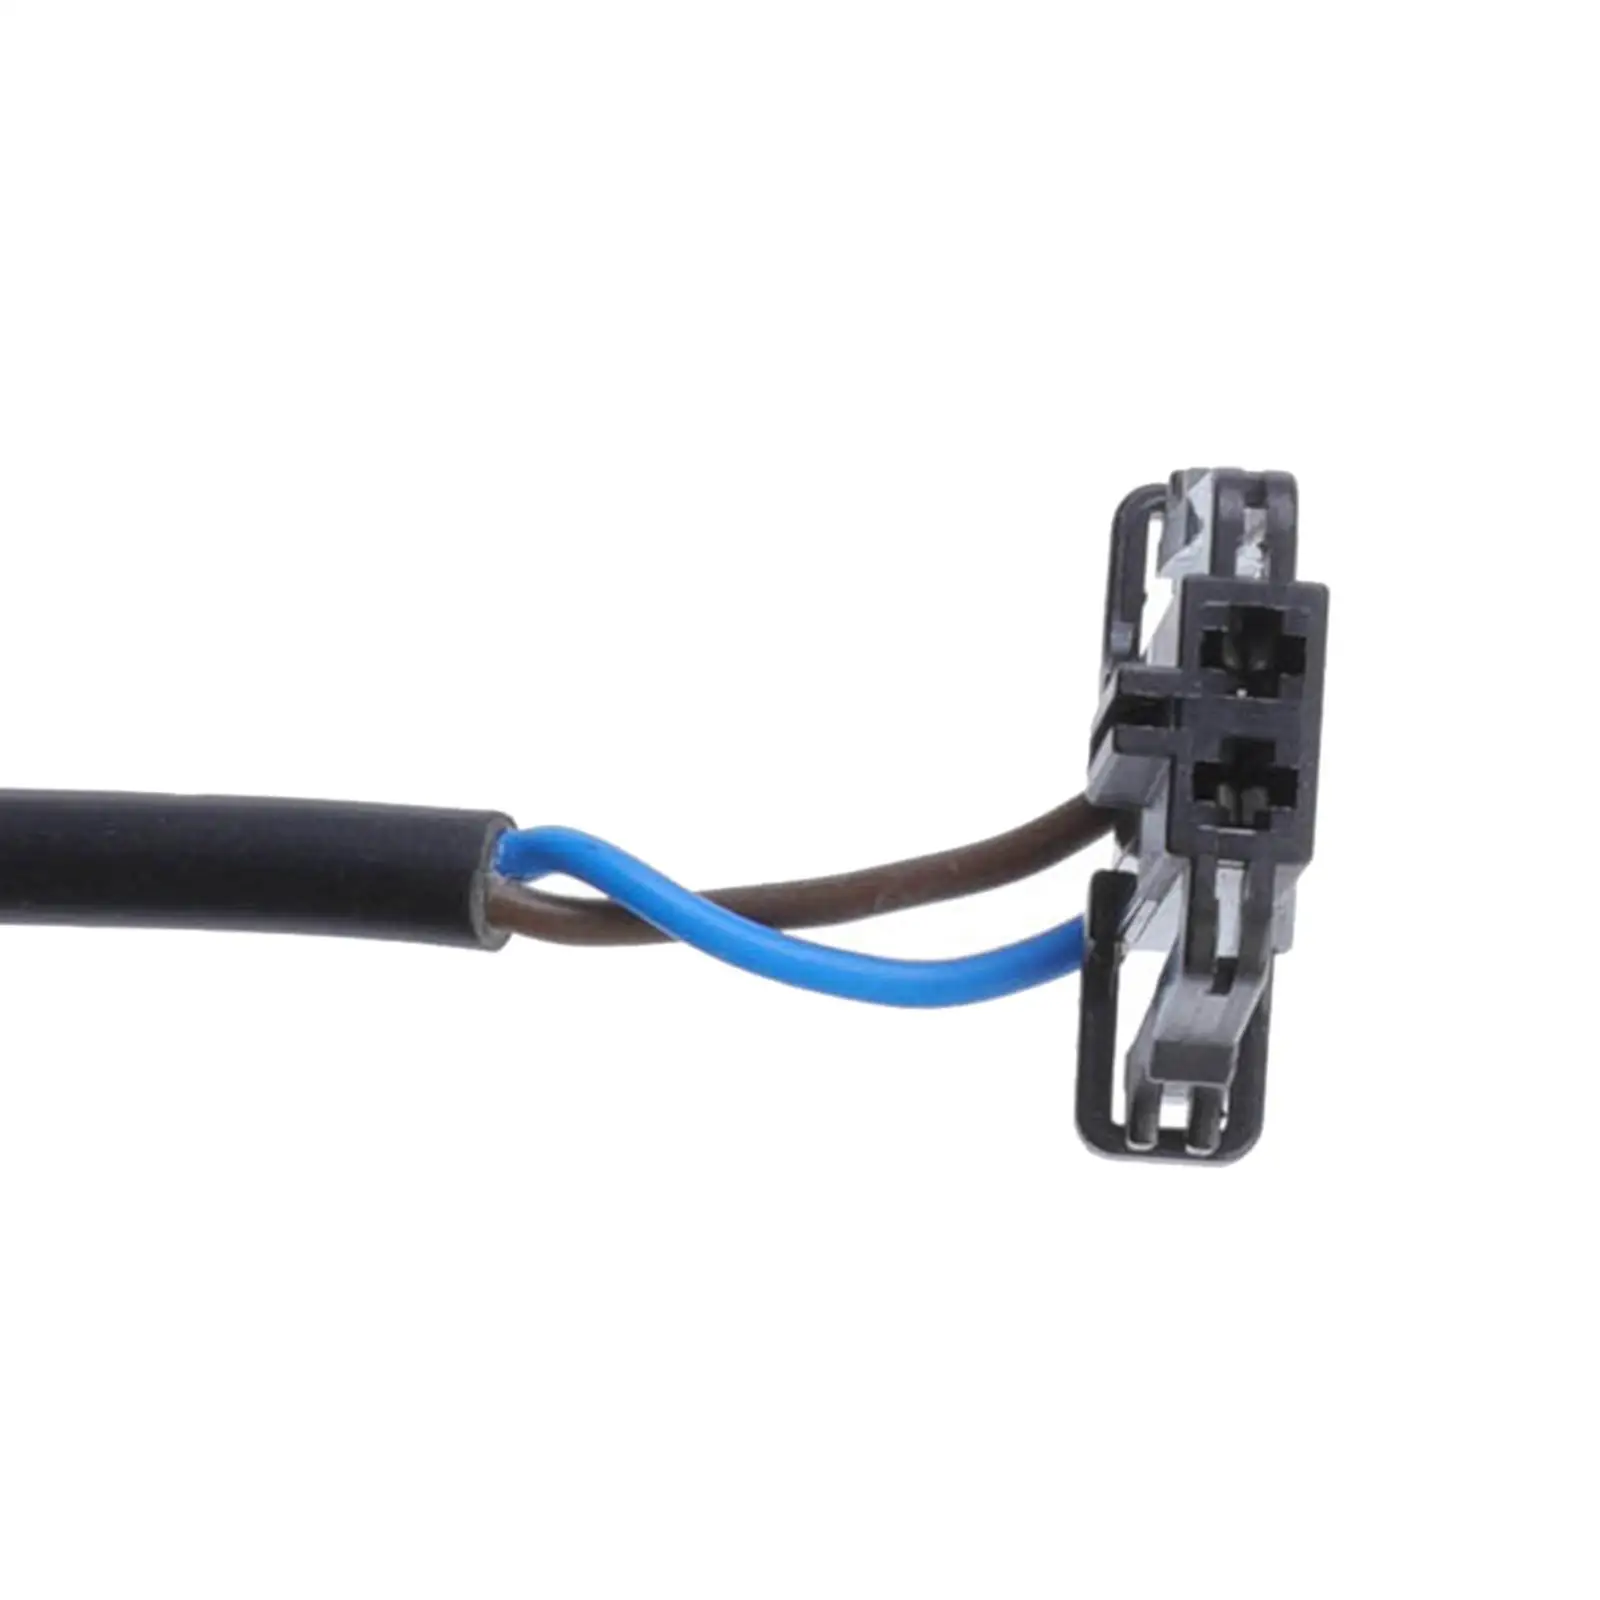 Fuel Filler Door Lock Actuator Repair Part Direct Replace Durable Quality Easy